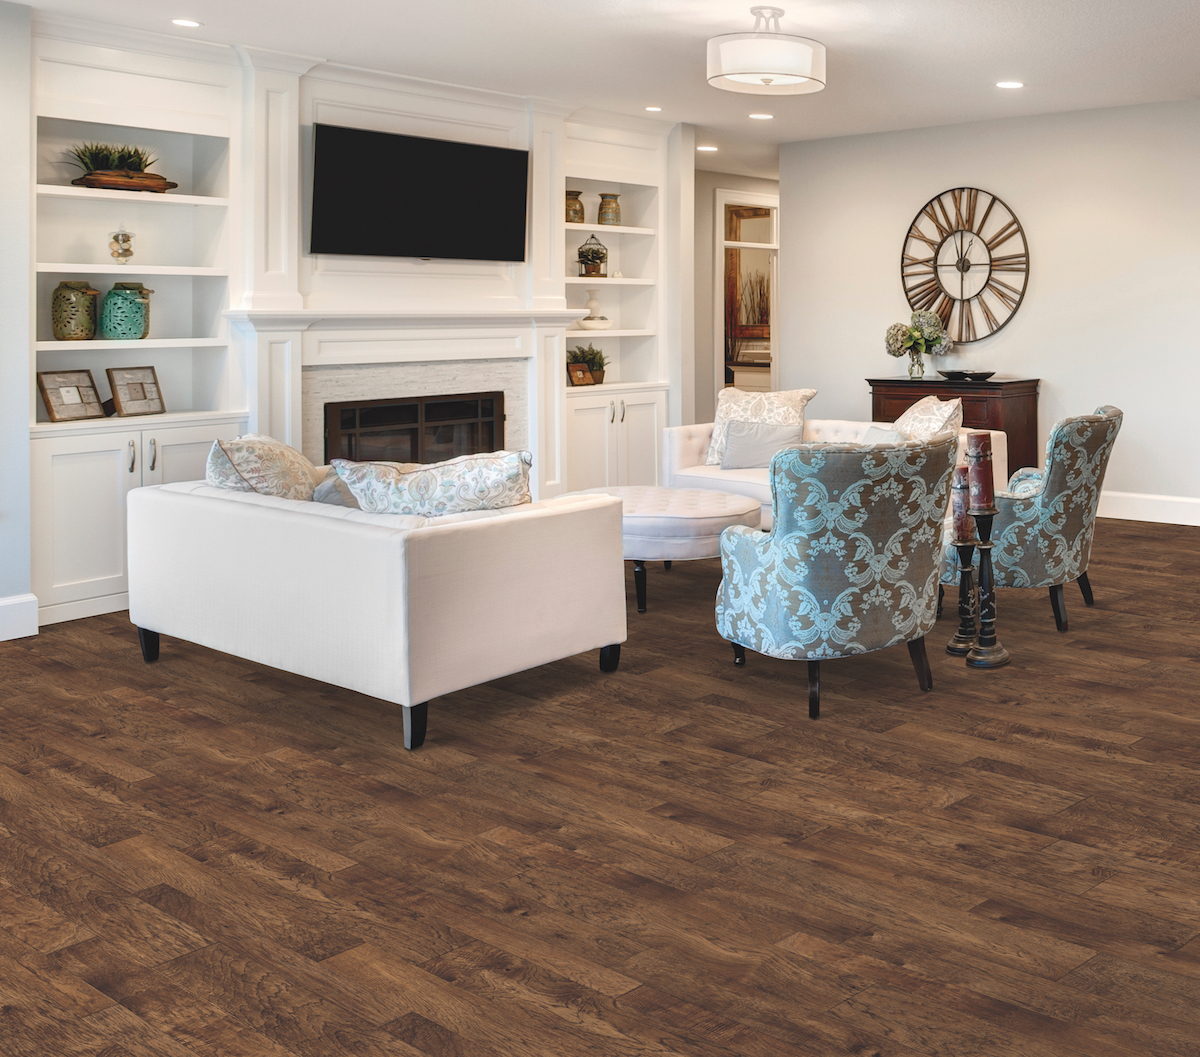 Choosing The Best Flooring For Every Room